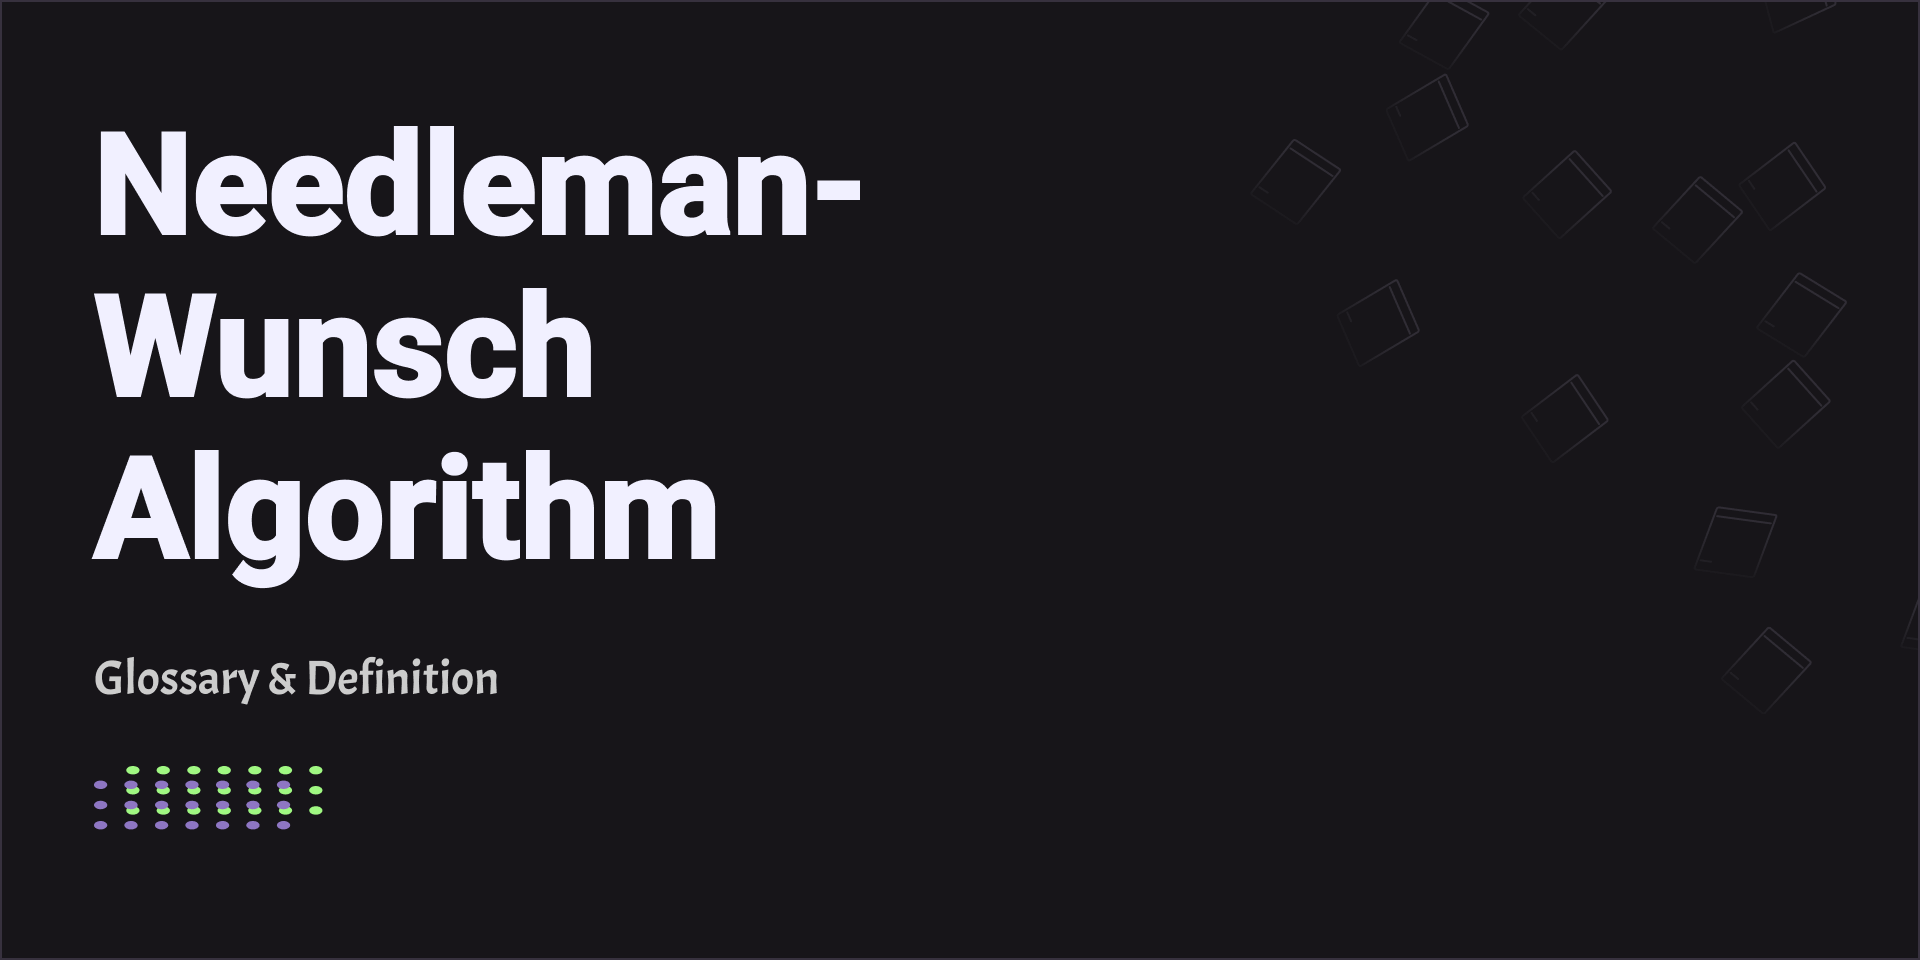 Needleman-Wunsch Algorithm